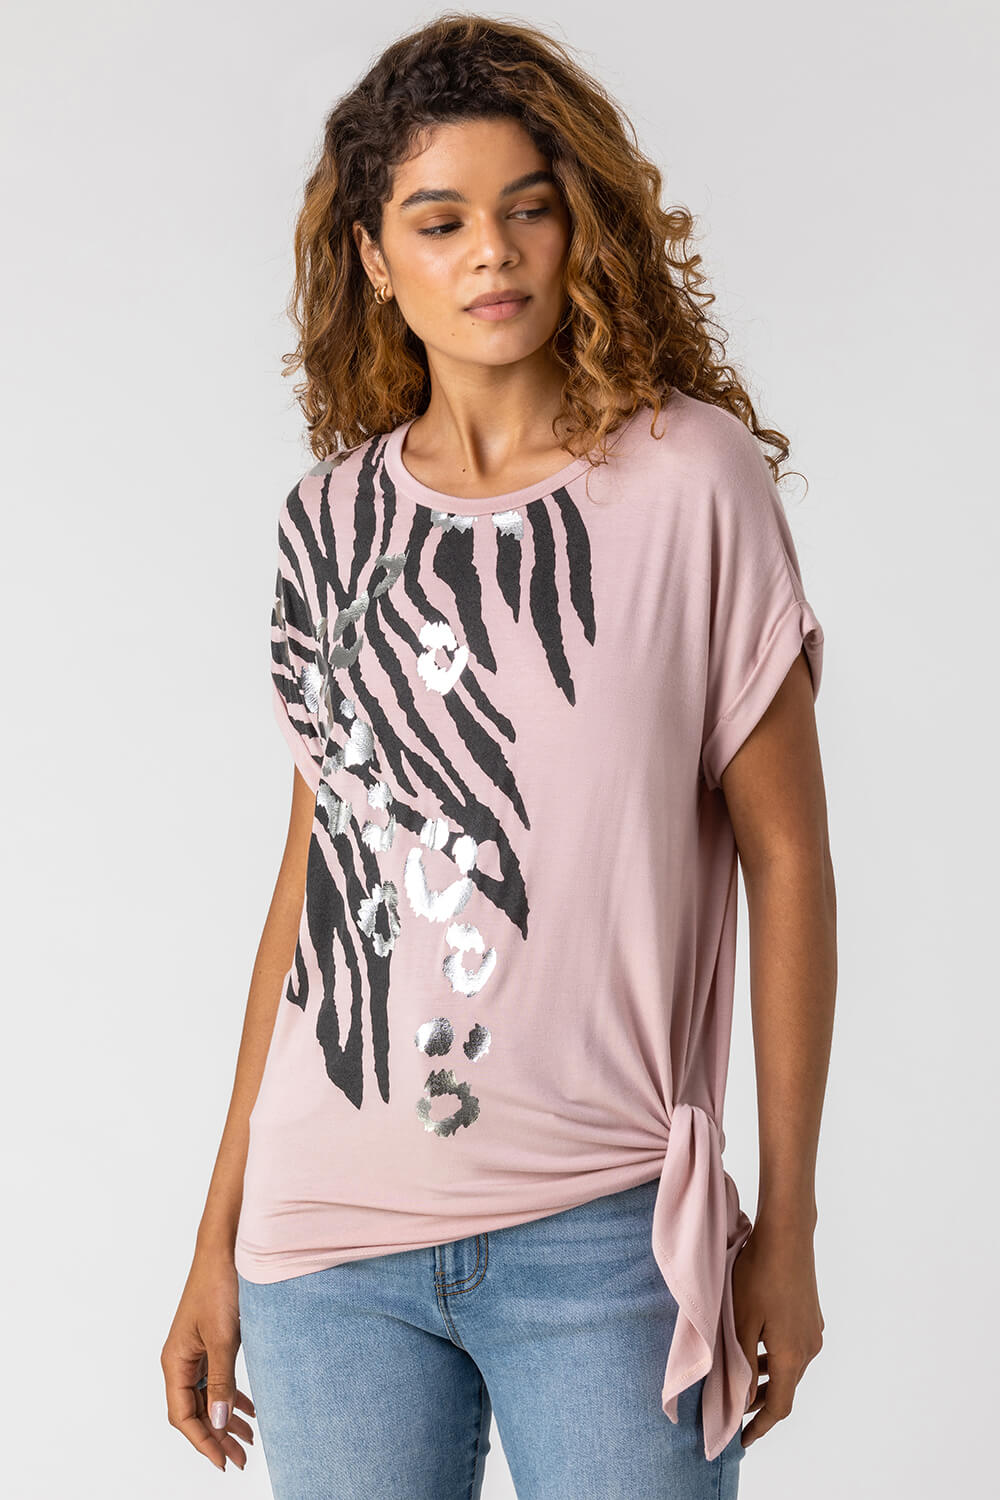 Animal Print Foil T Shirt in Light Pink - Roman Originals UK